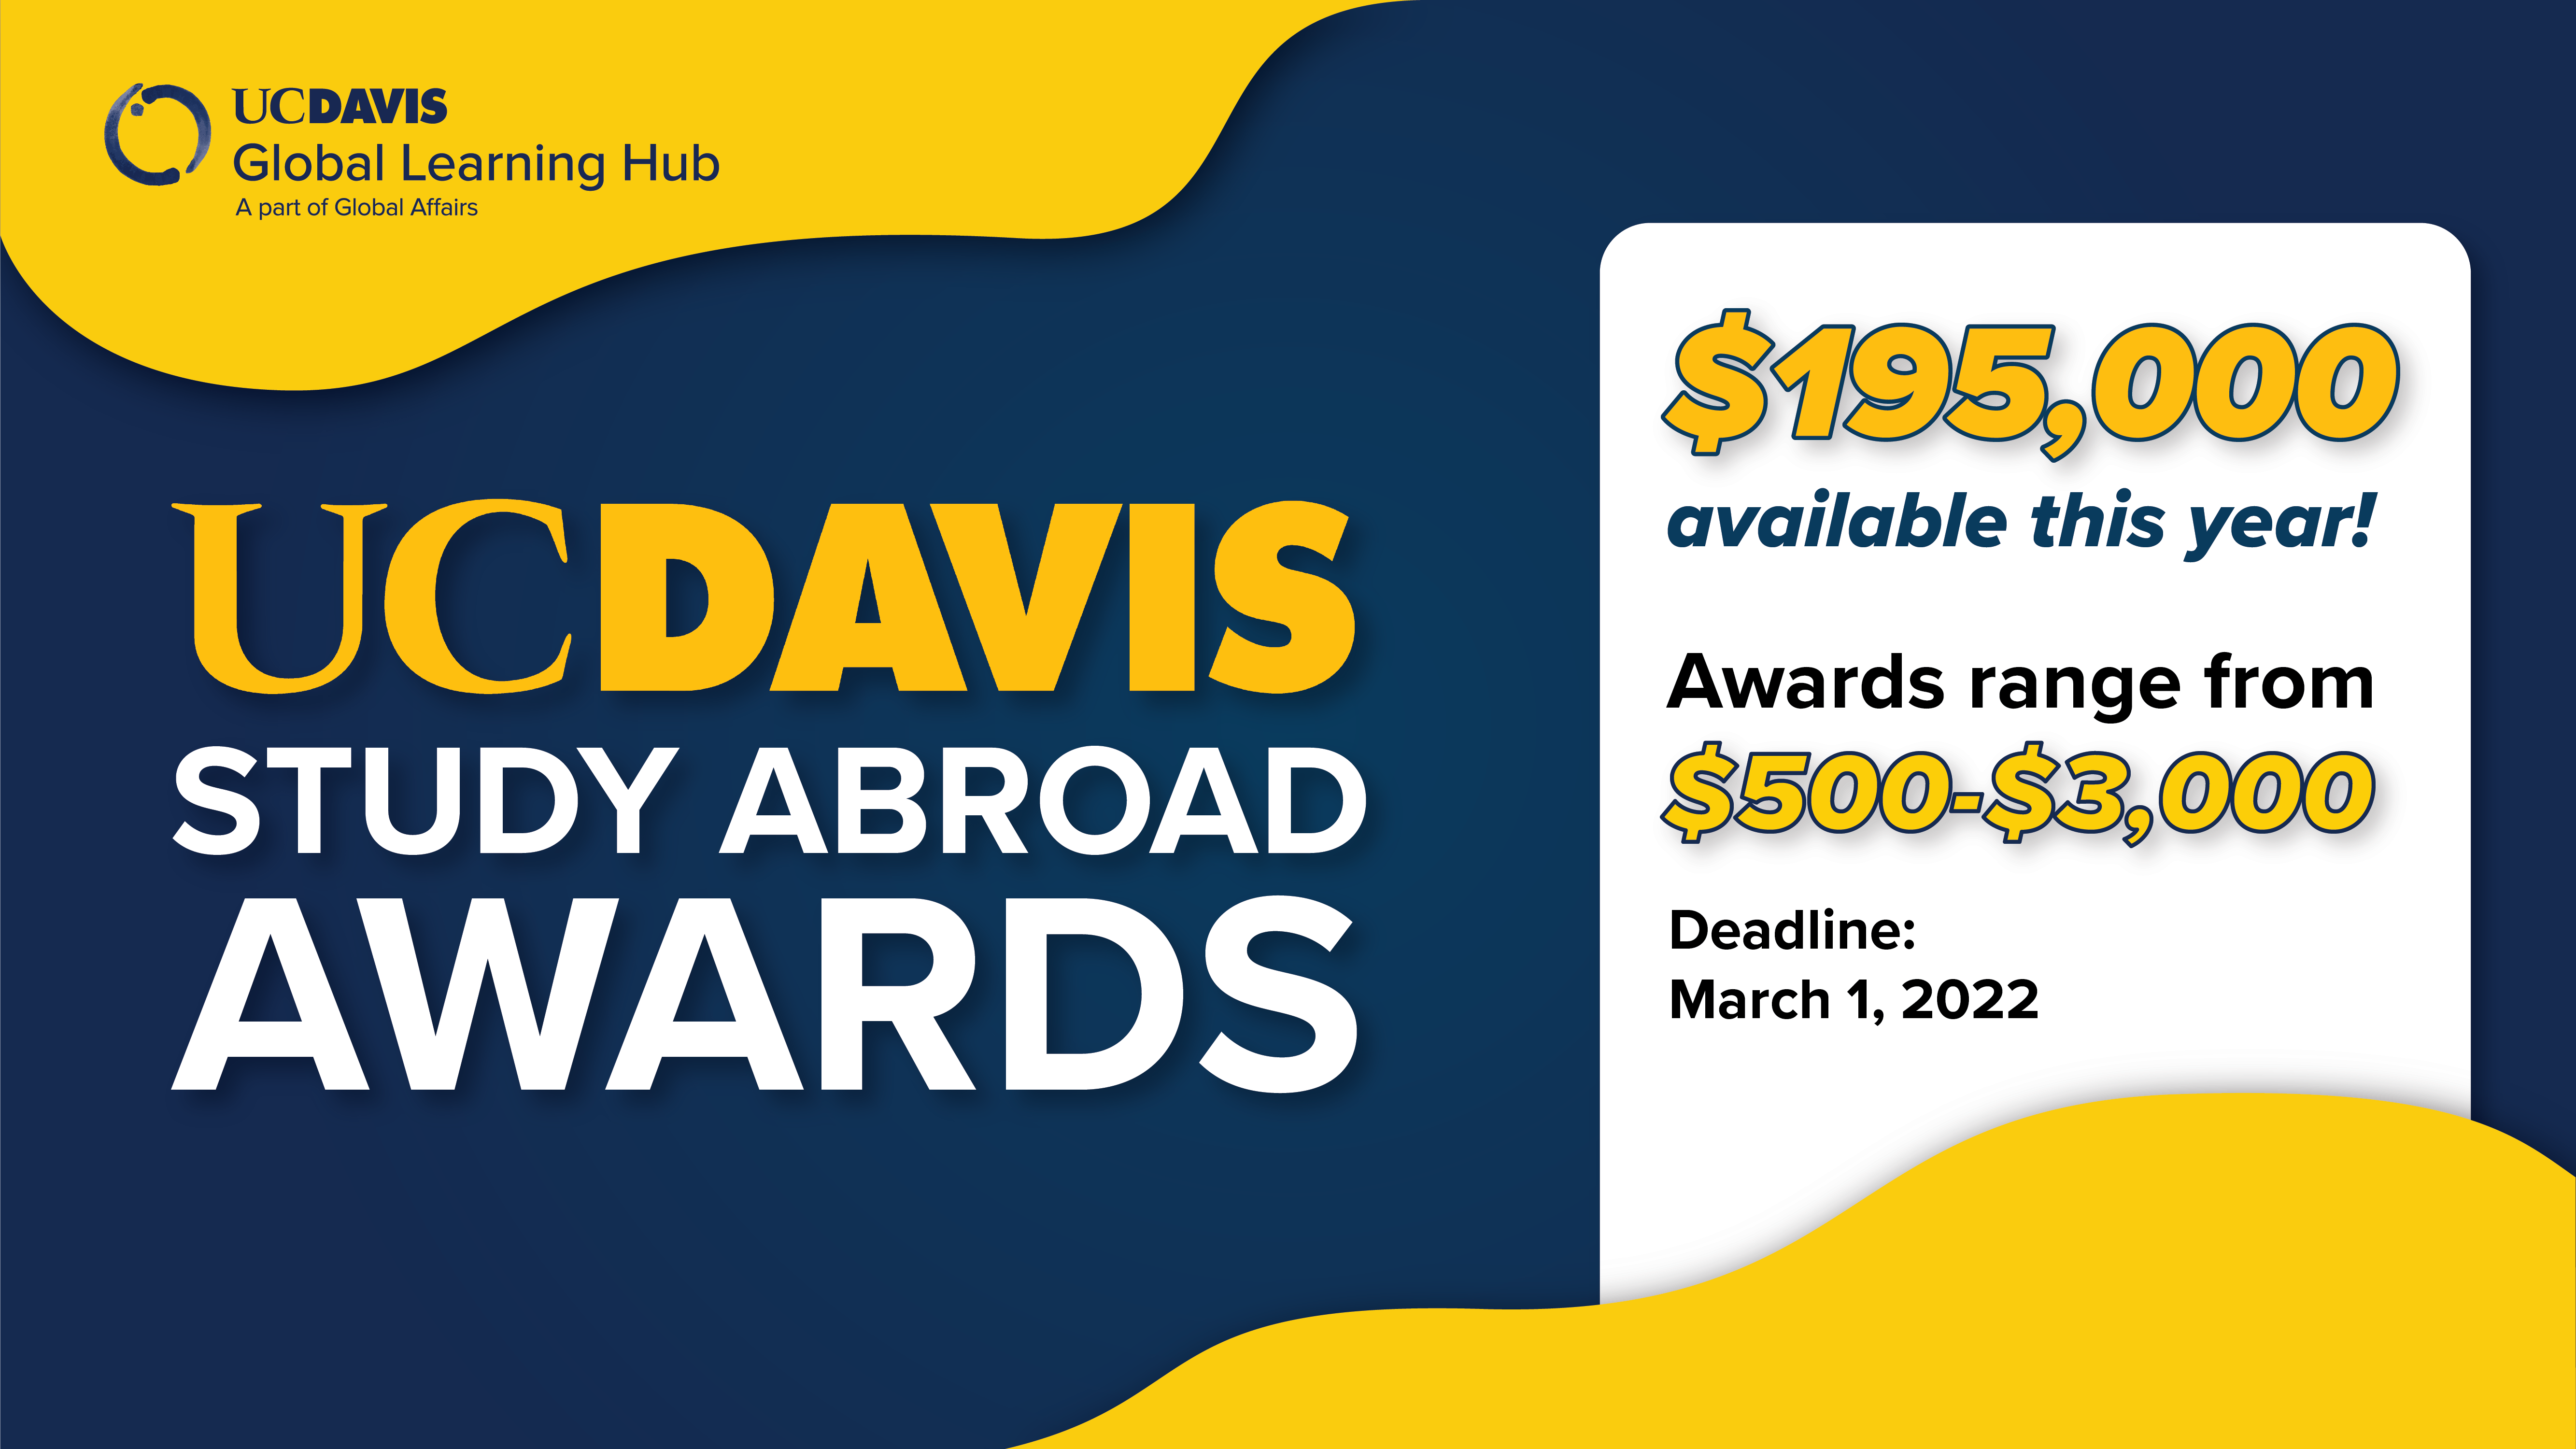 Text: "UC Davis Study Abroad Awards"